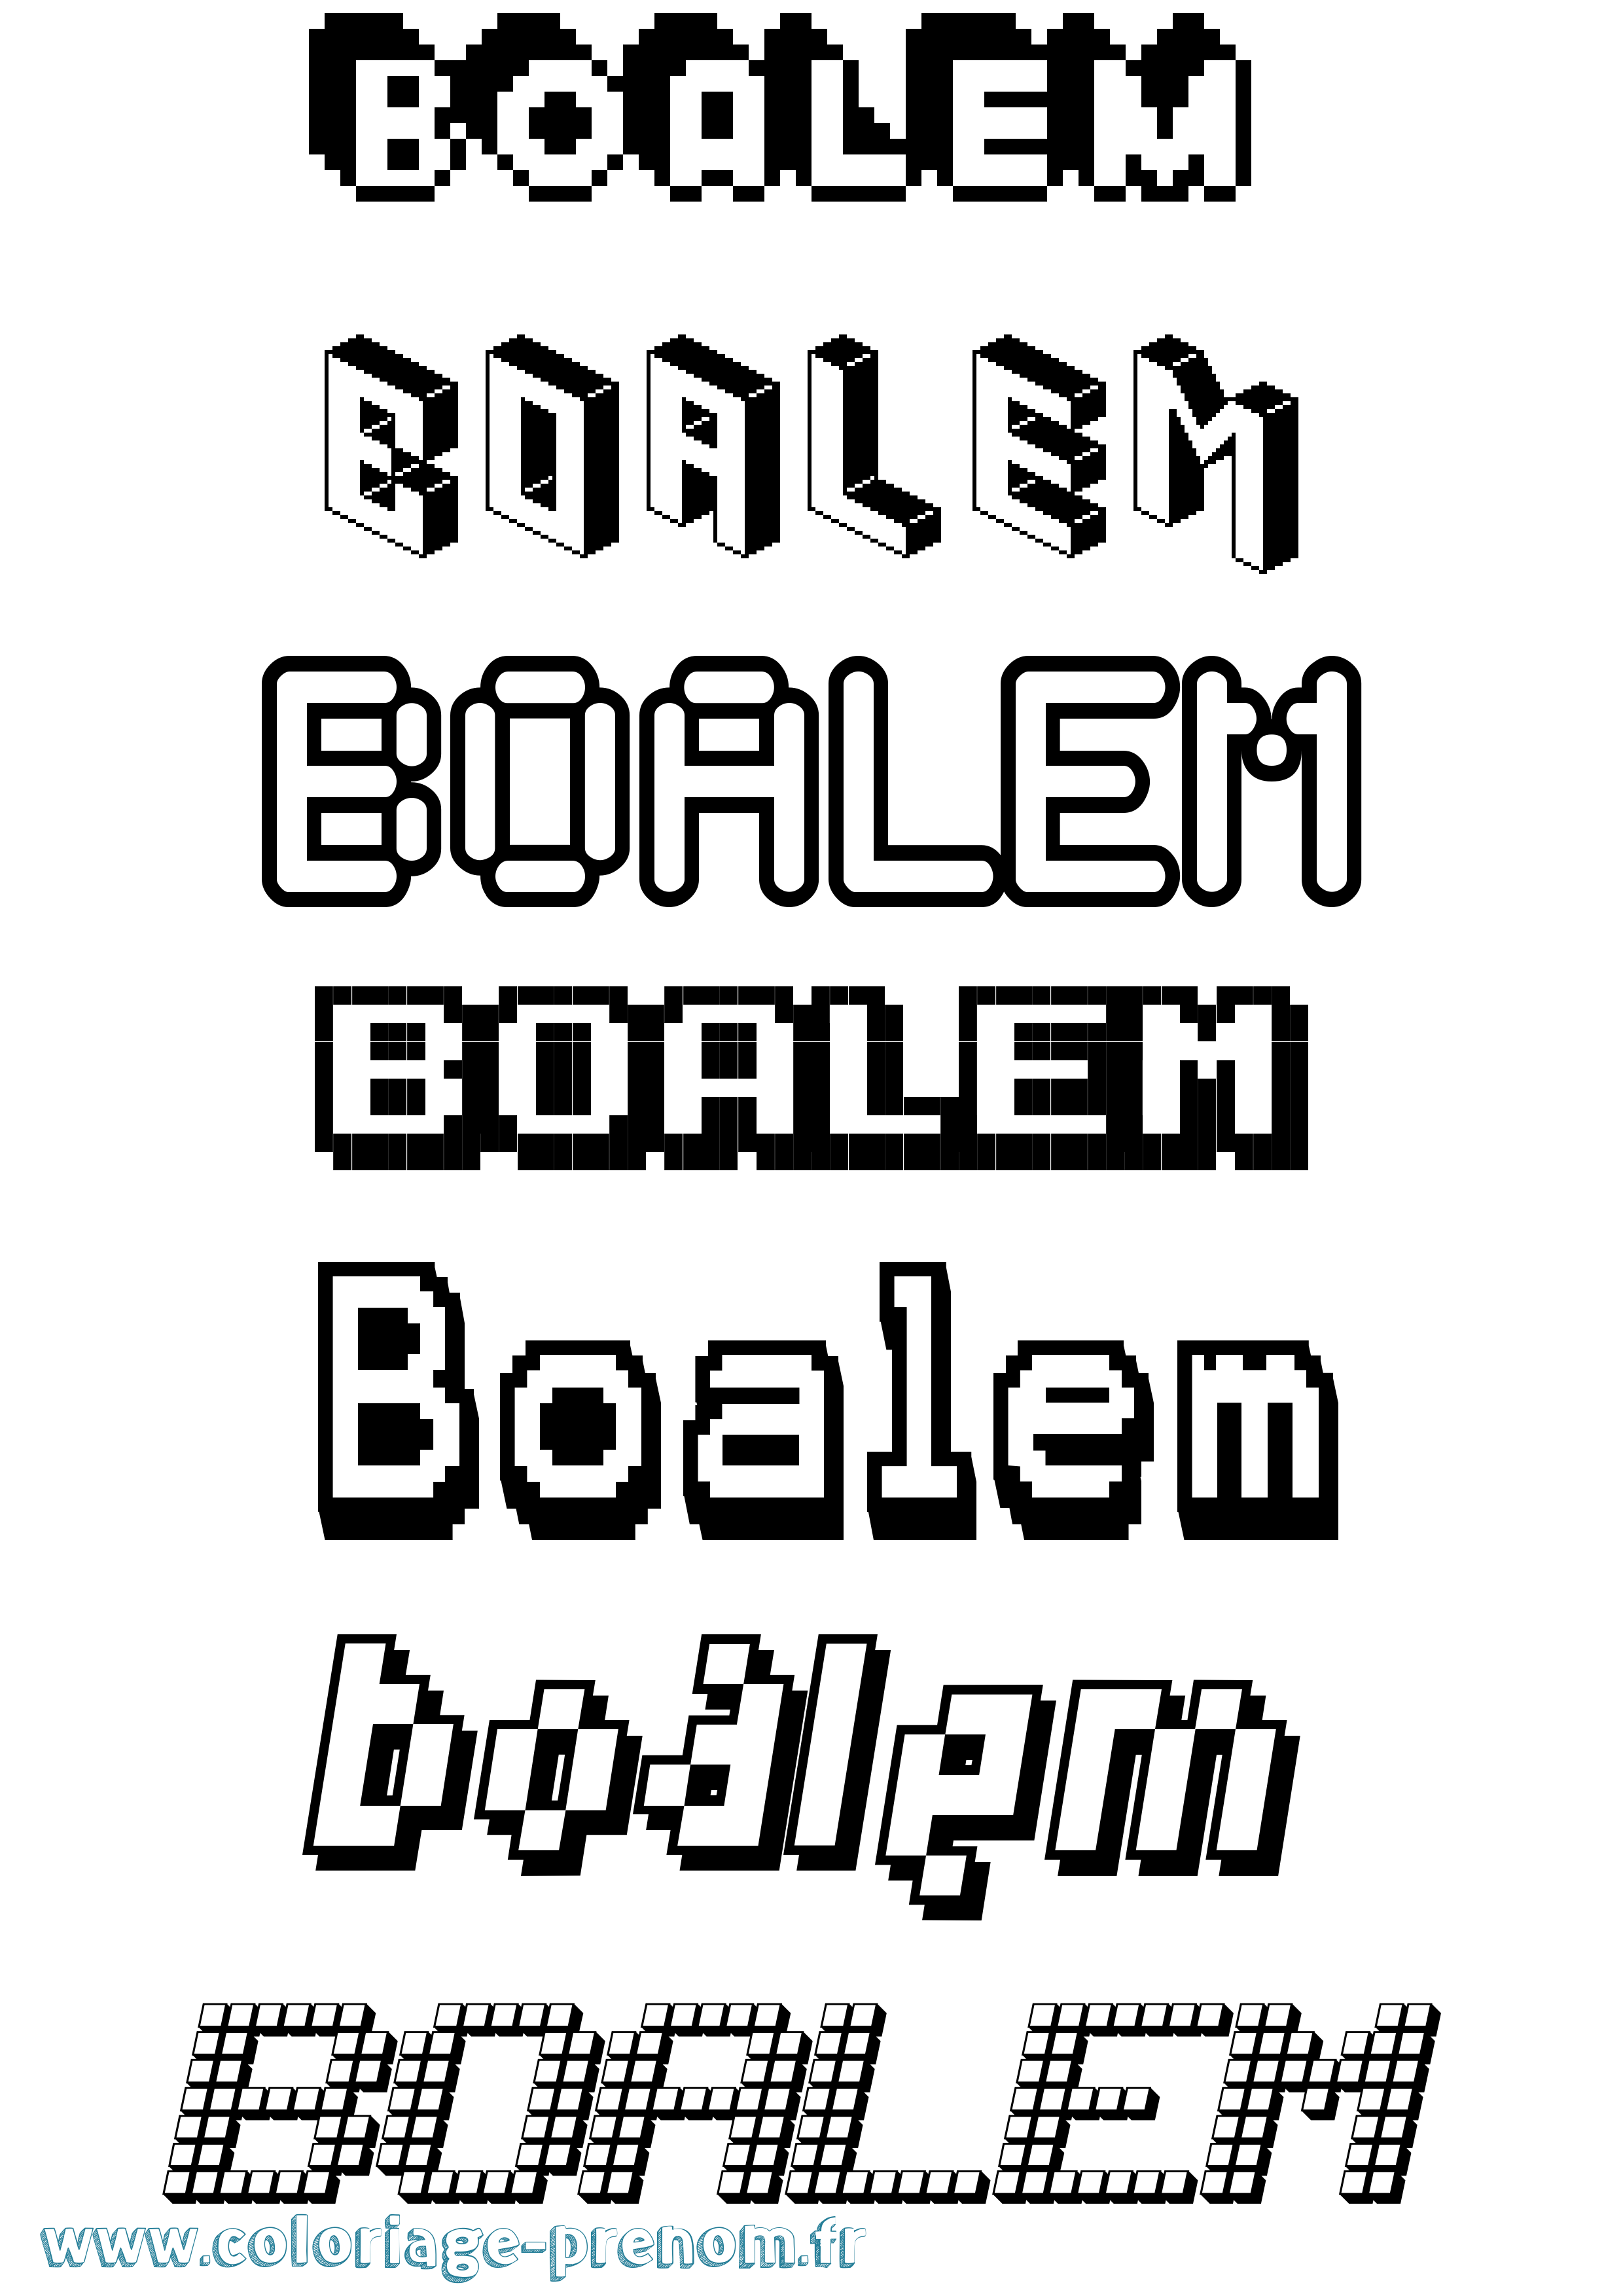 Coloriage prénom Boalem Pixel